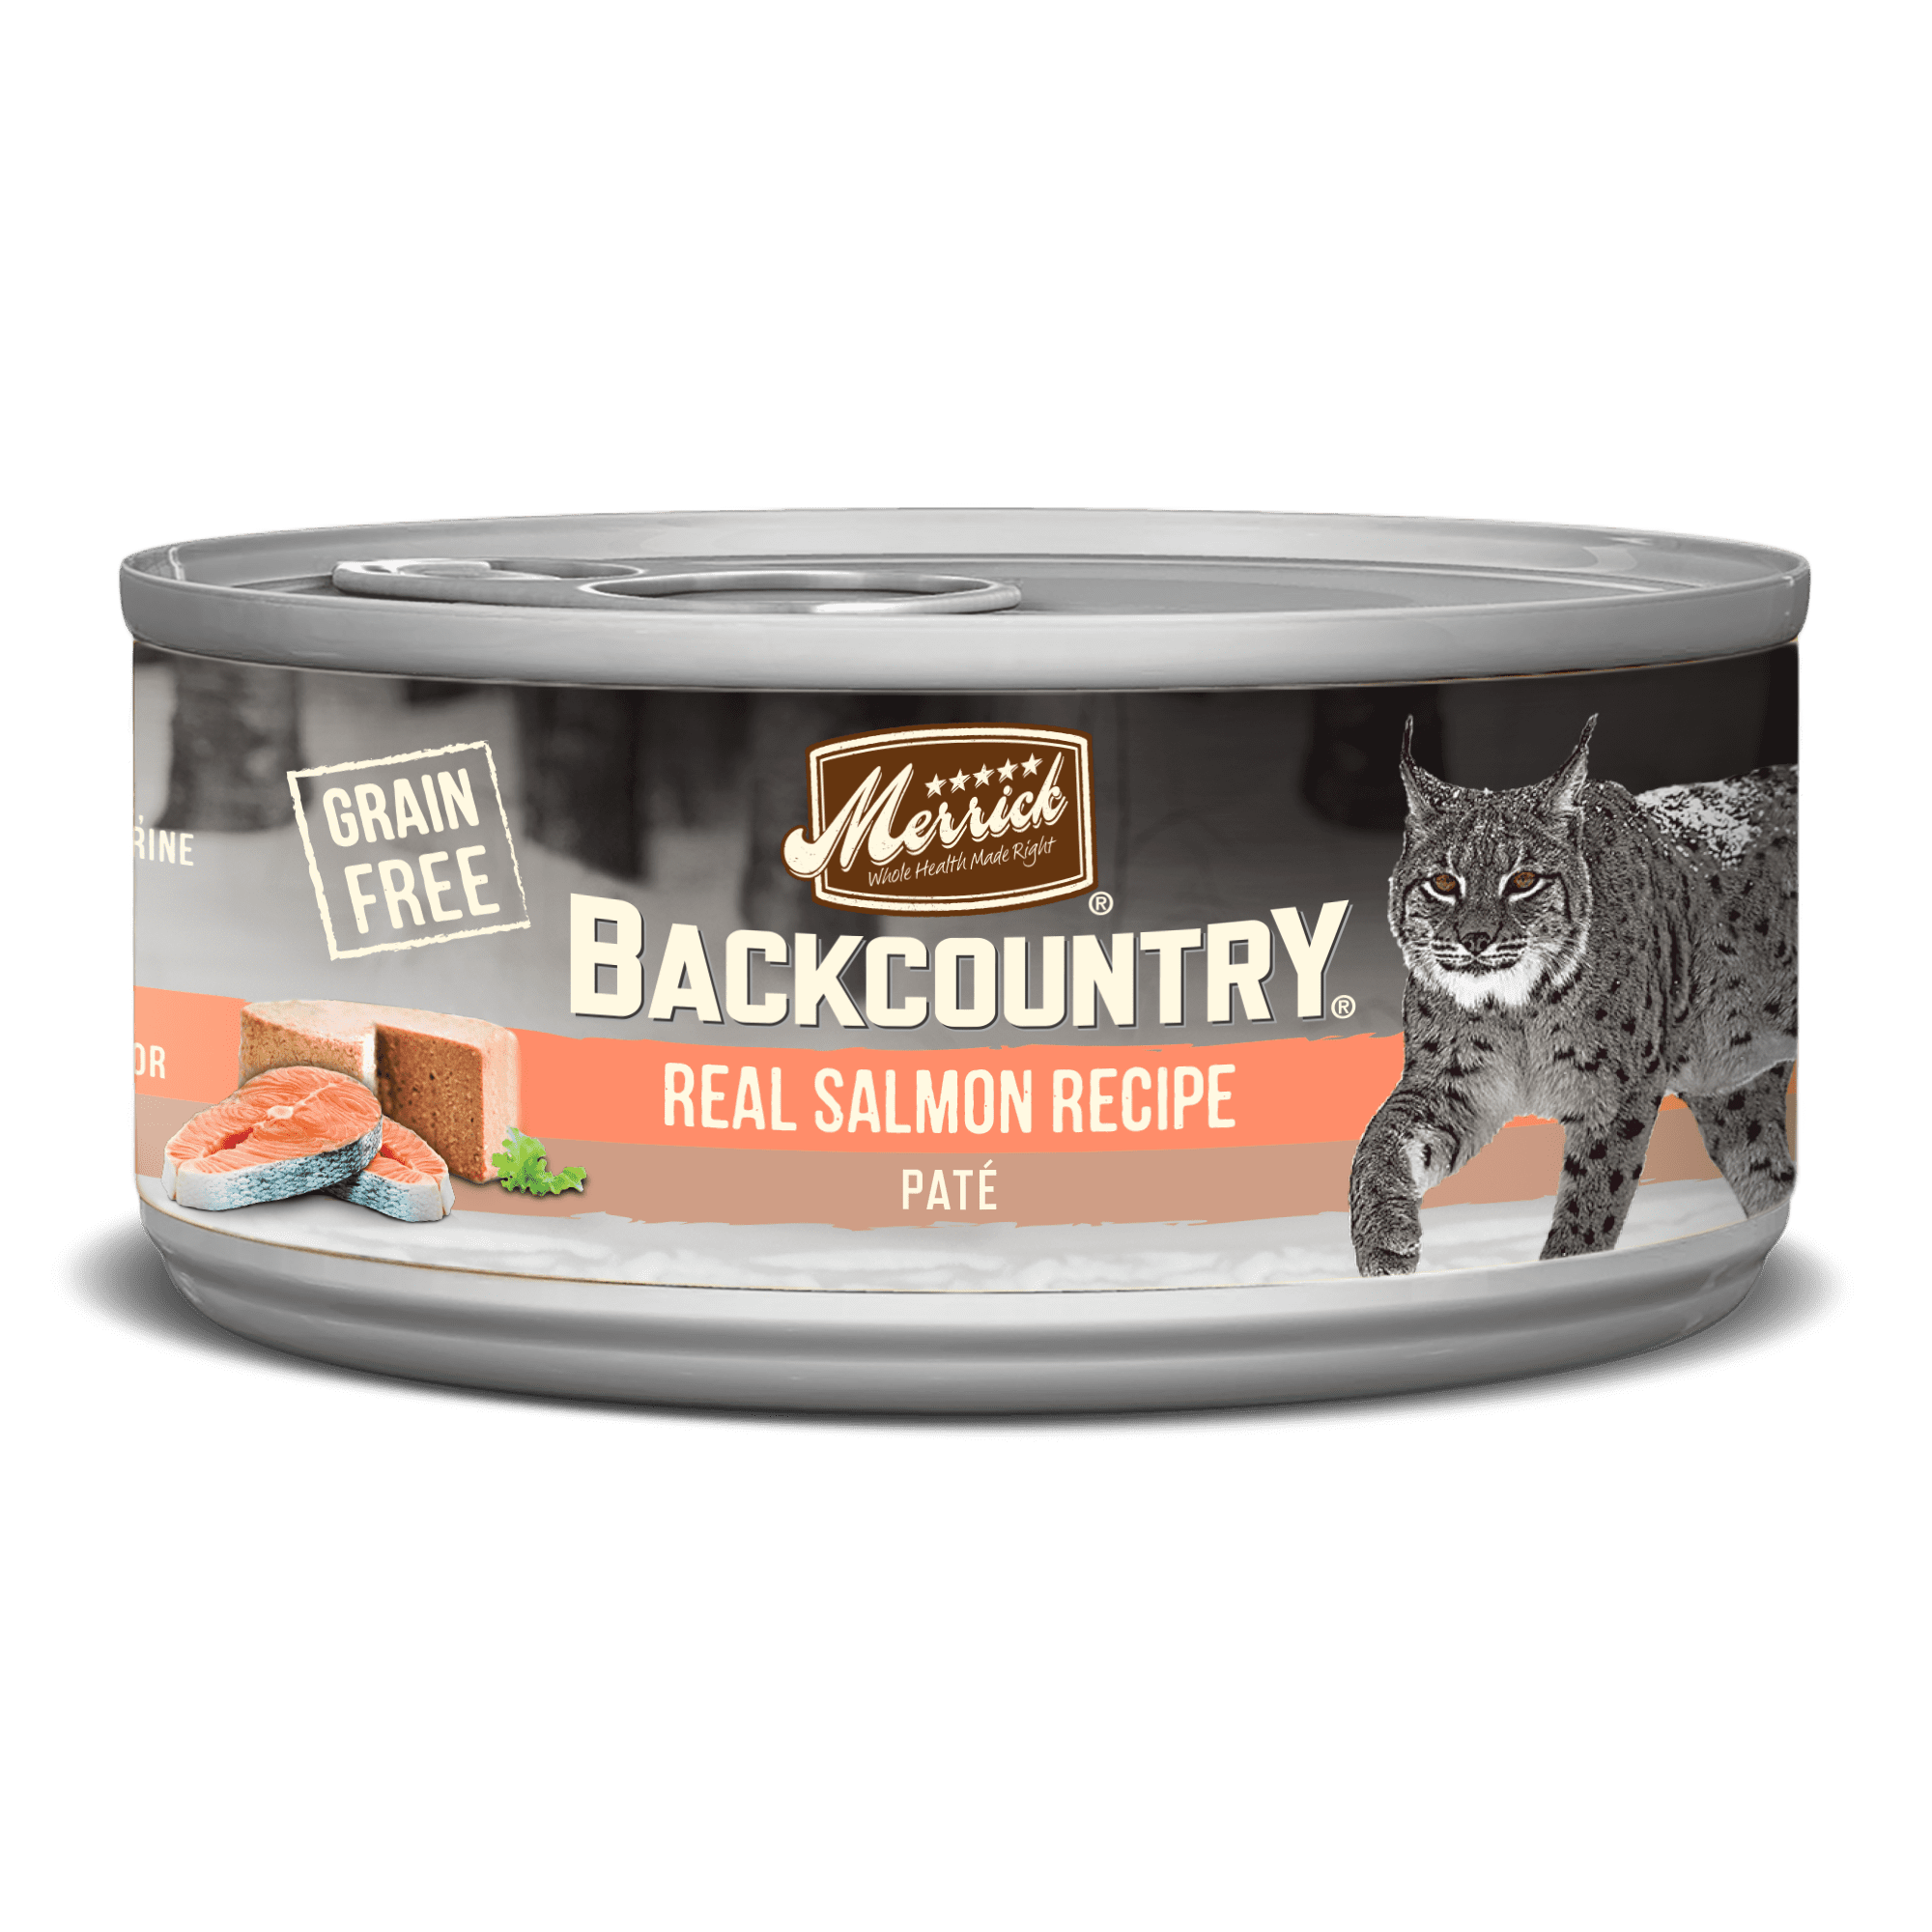 Merrick Backcountry GrainFree Real Salmon Recipe Pate Wet Cat Food, 5